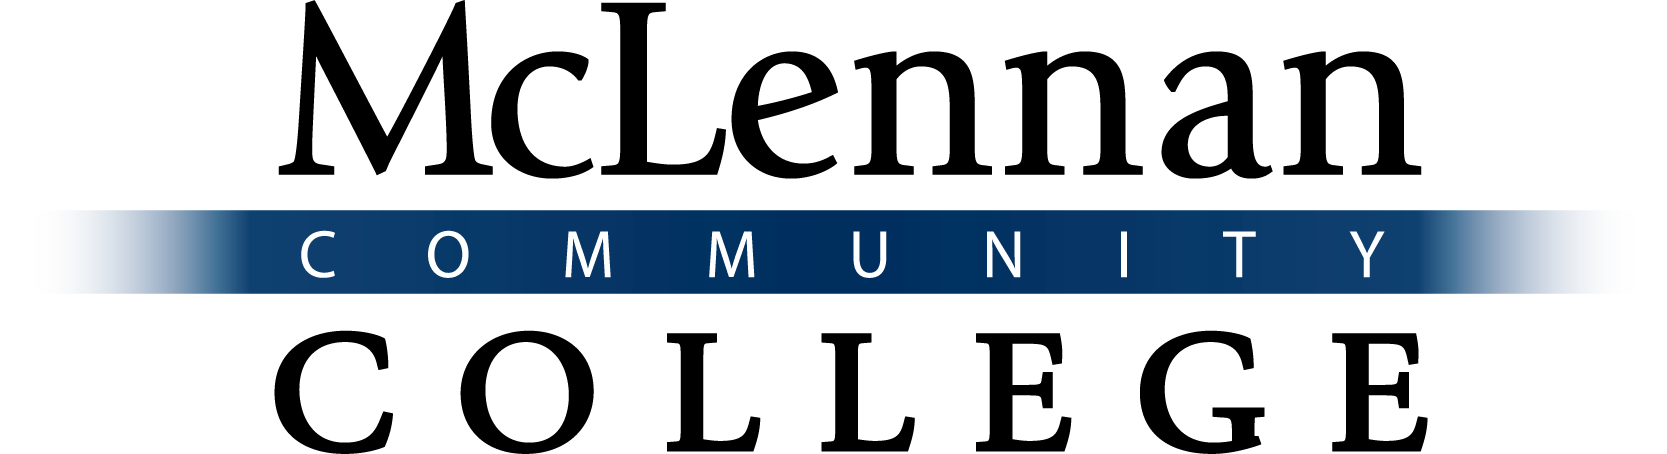 McLennan Community College logo